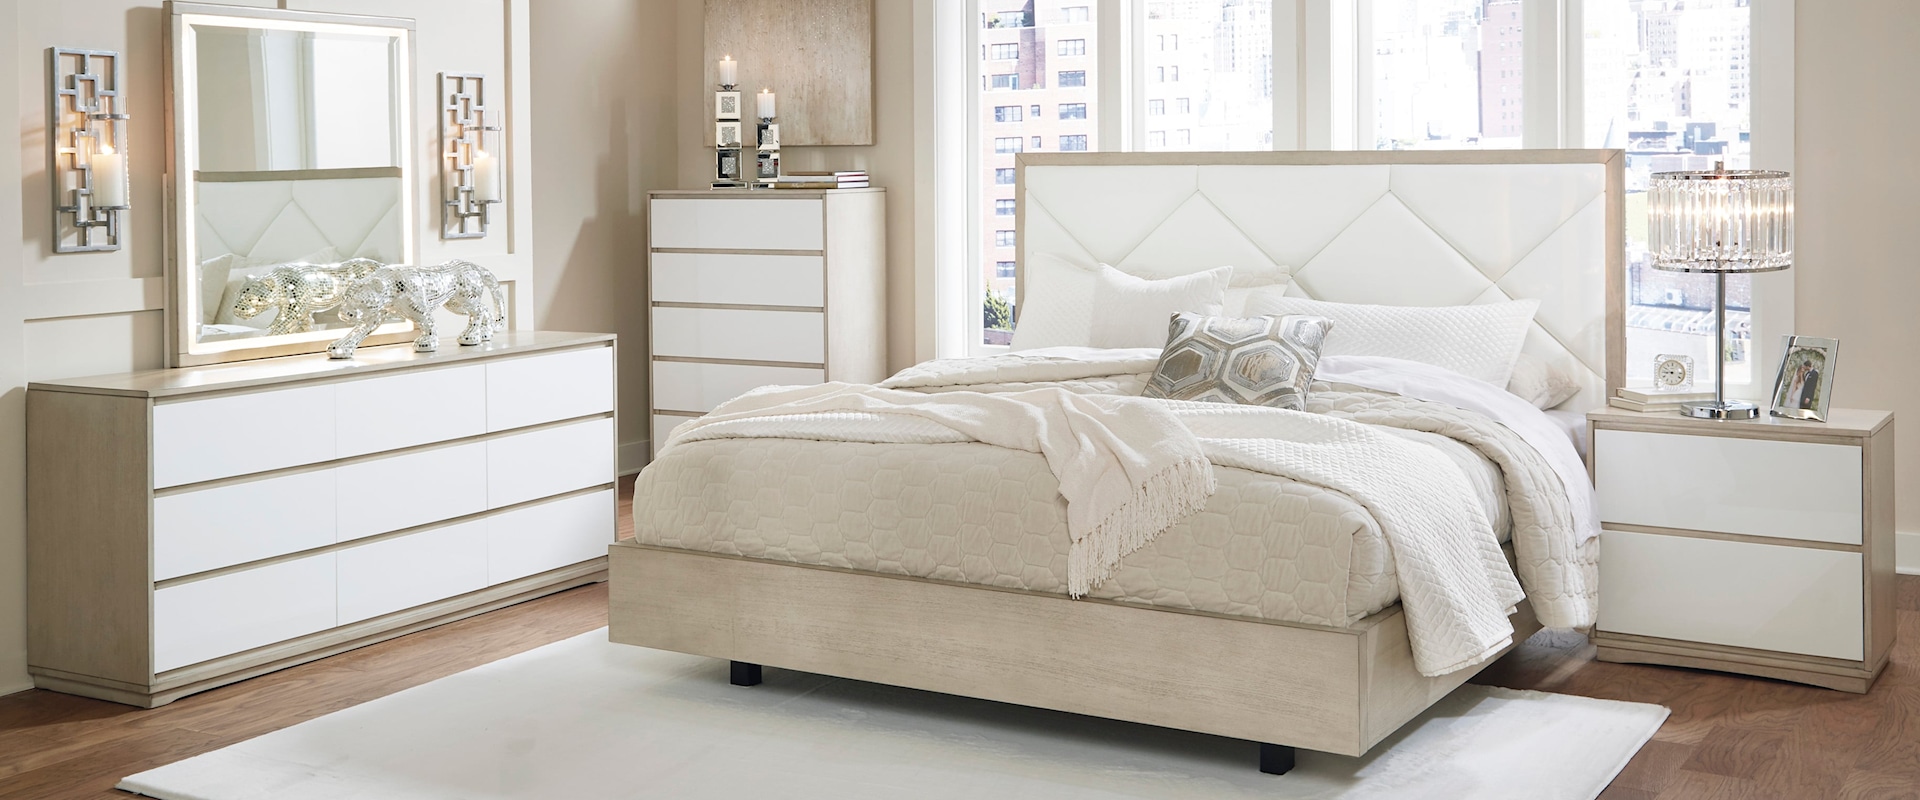 Contemporary Bedroom Set - Queen size bed